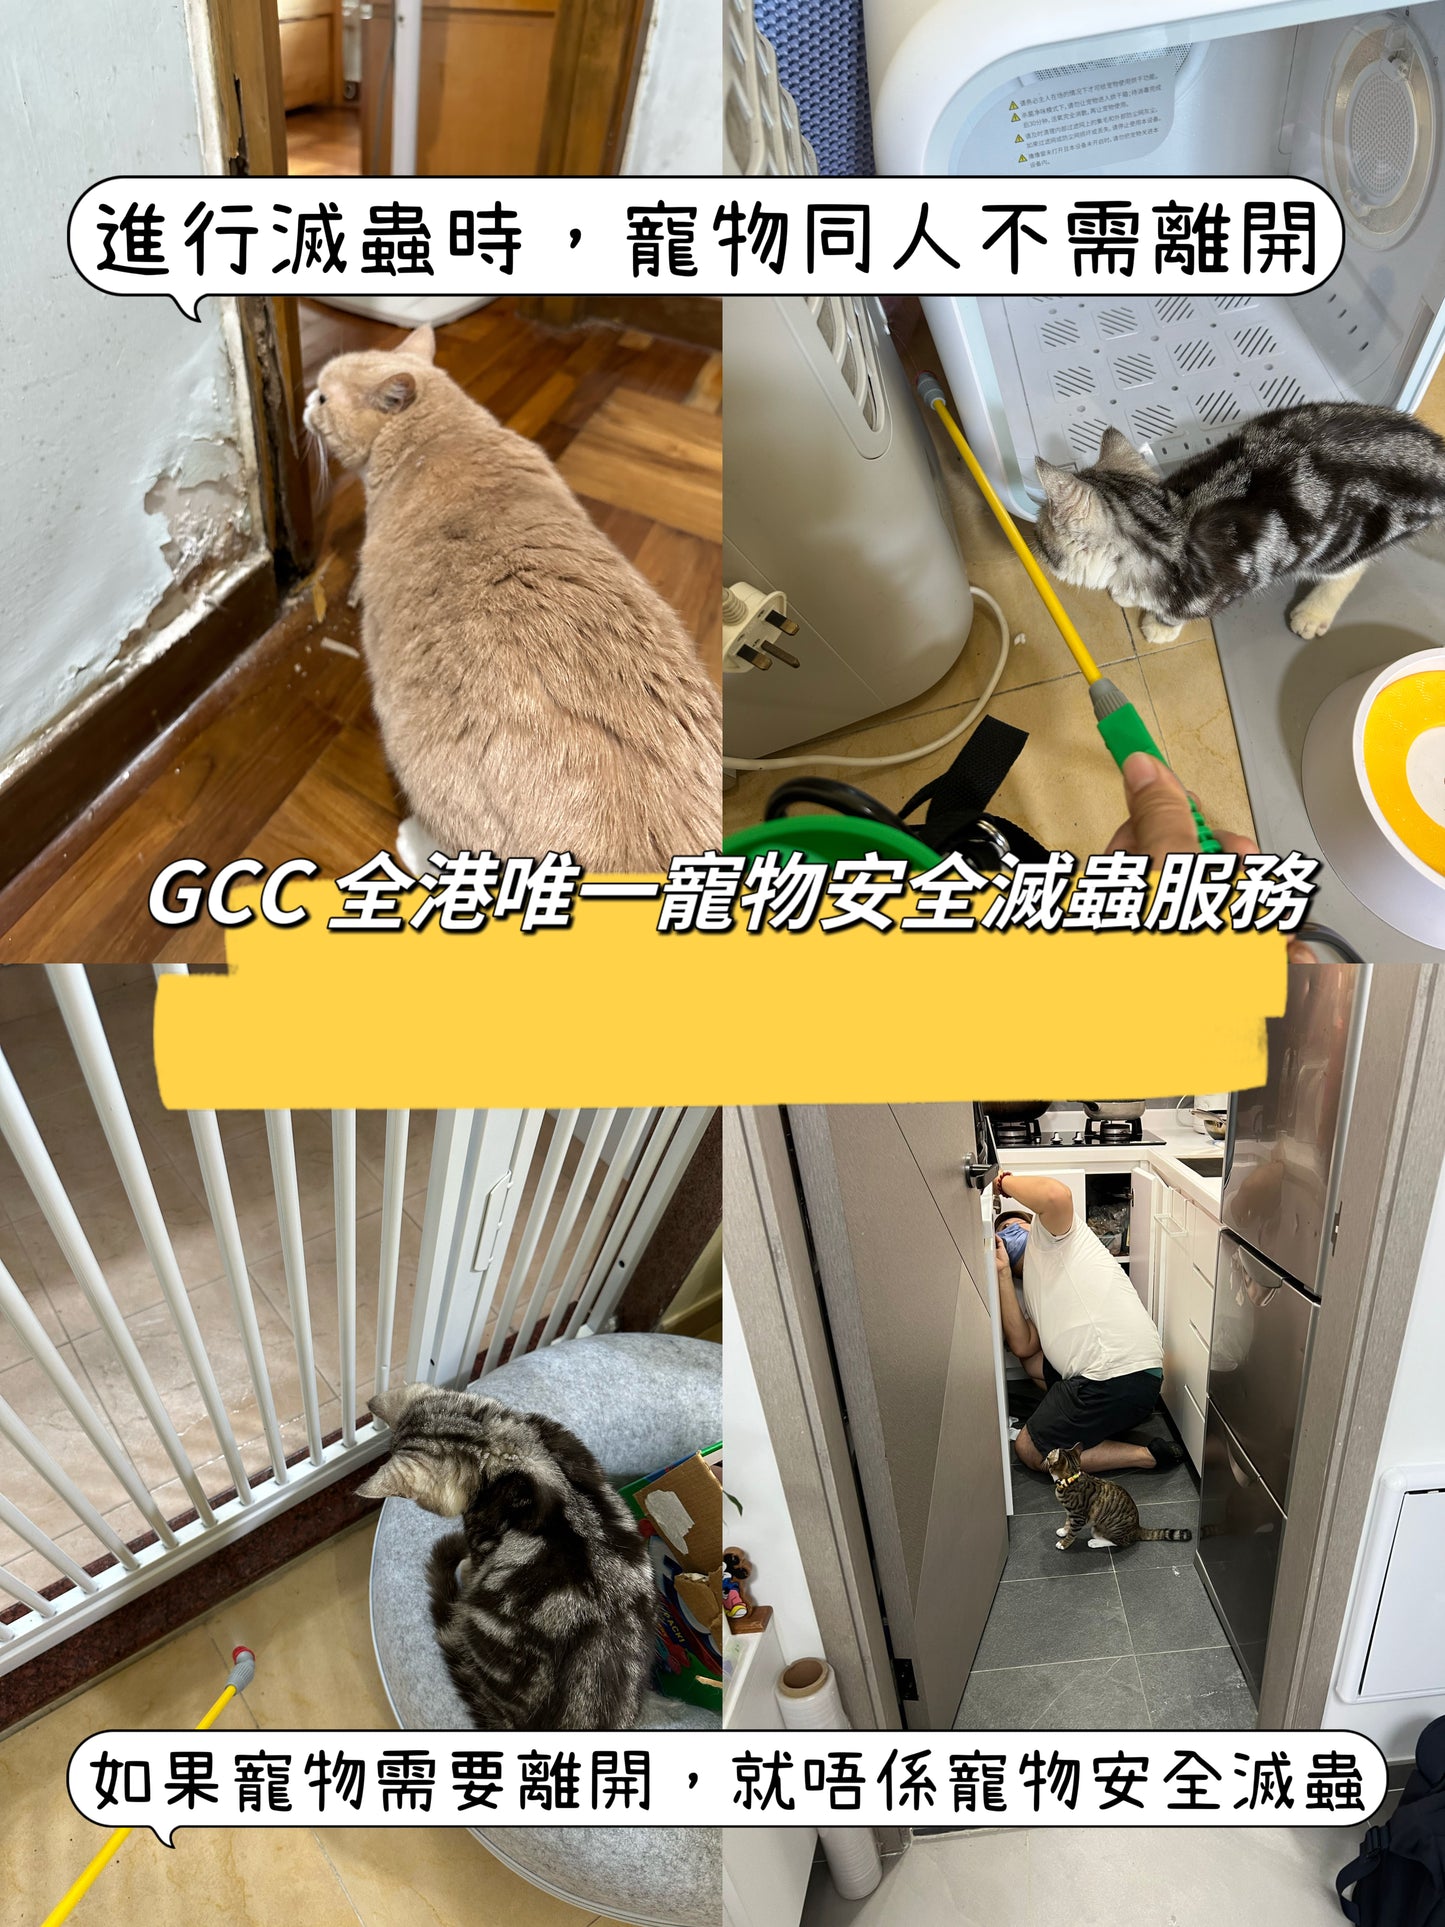 GCC Professional Pet Safety Pest Control